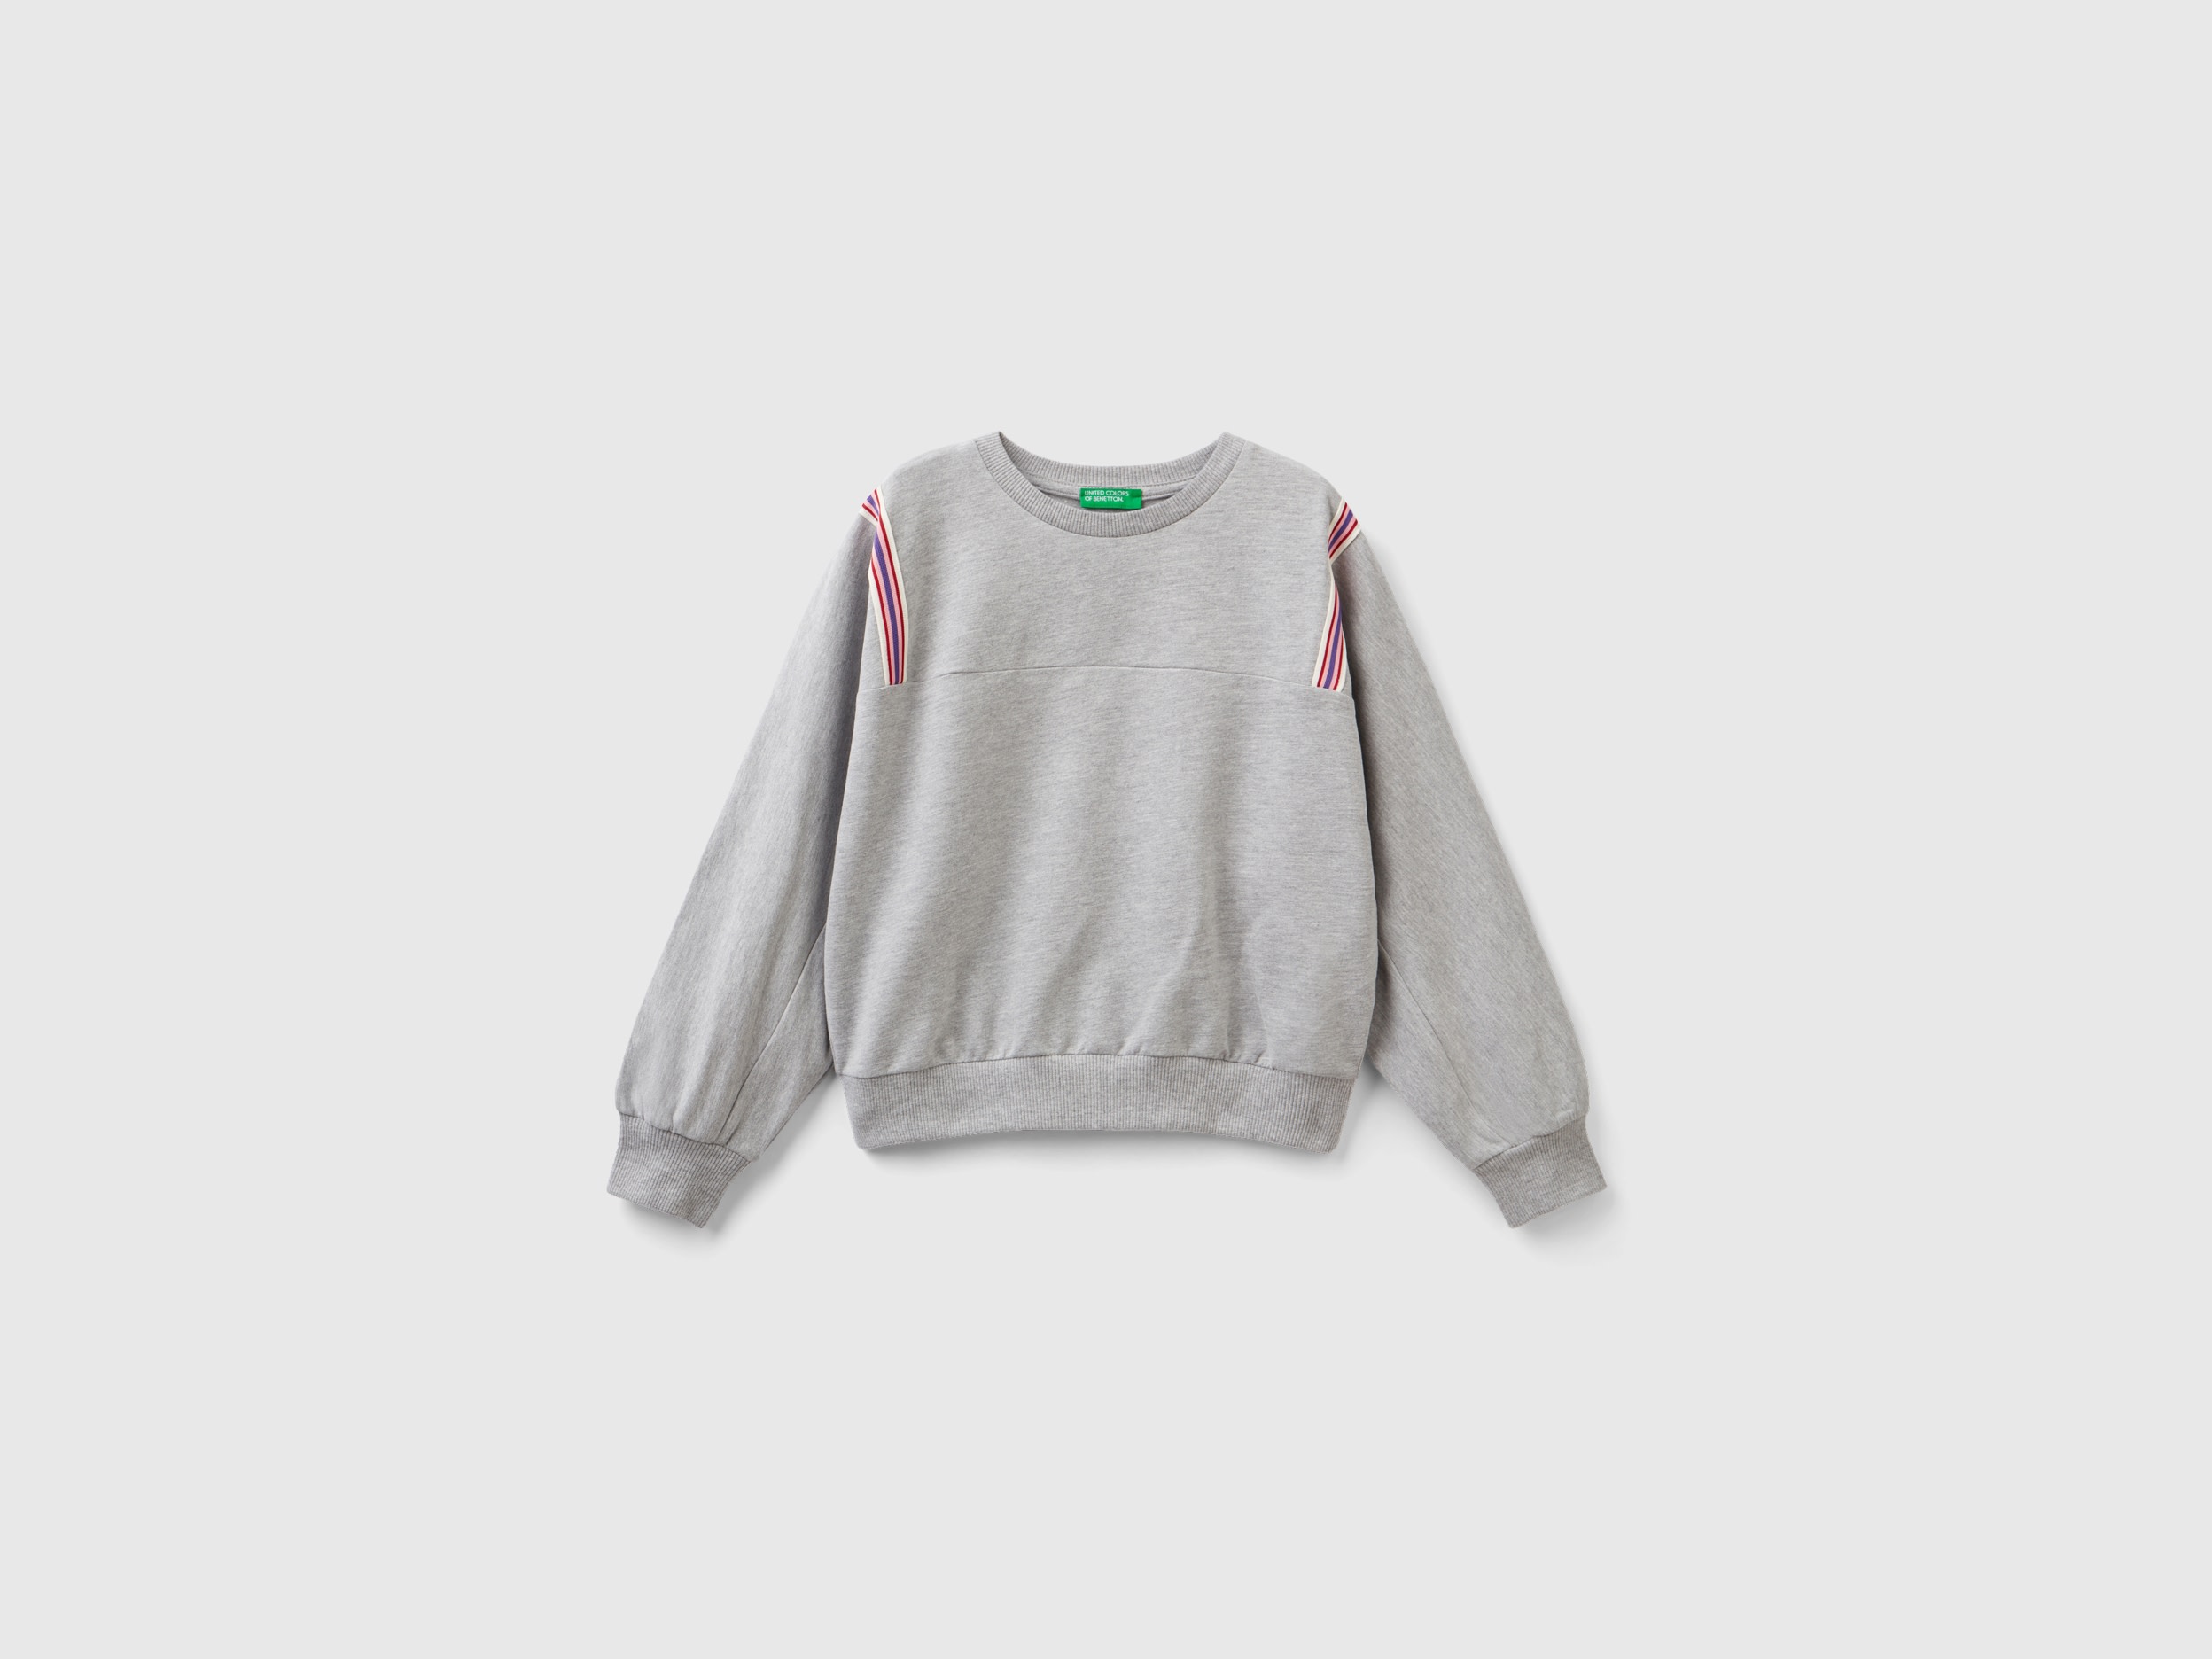 Benetton, Sweatshirt With Striped Details, size 3XL, Gray, Kids